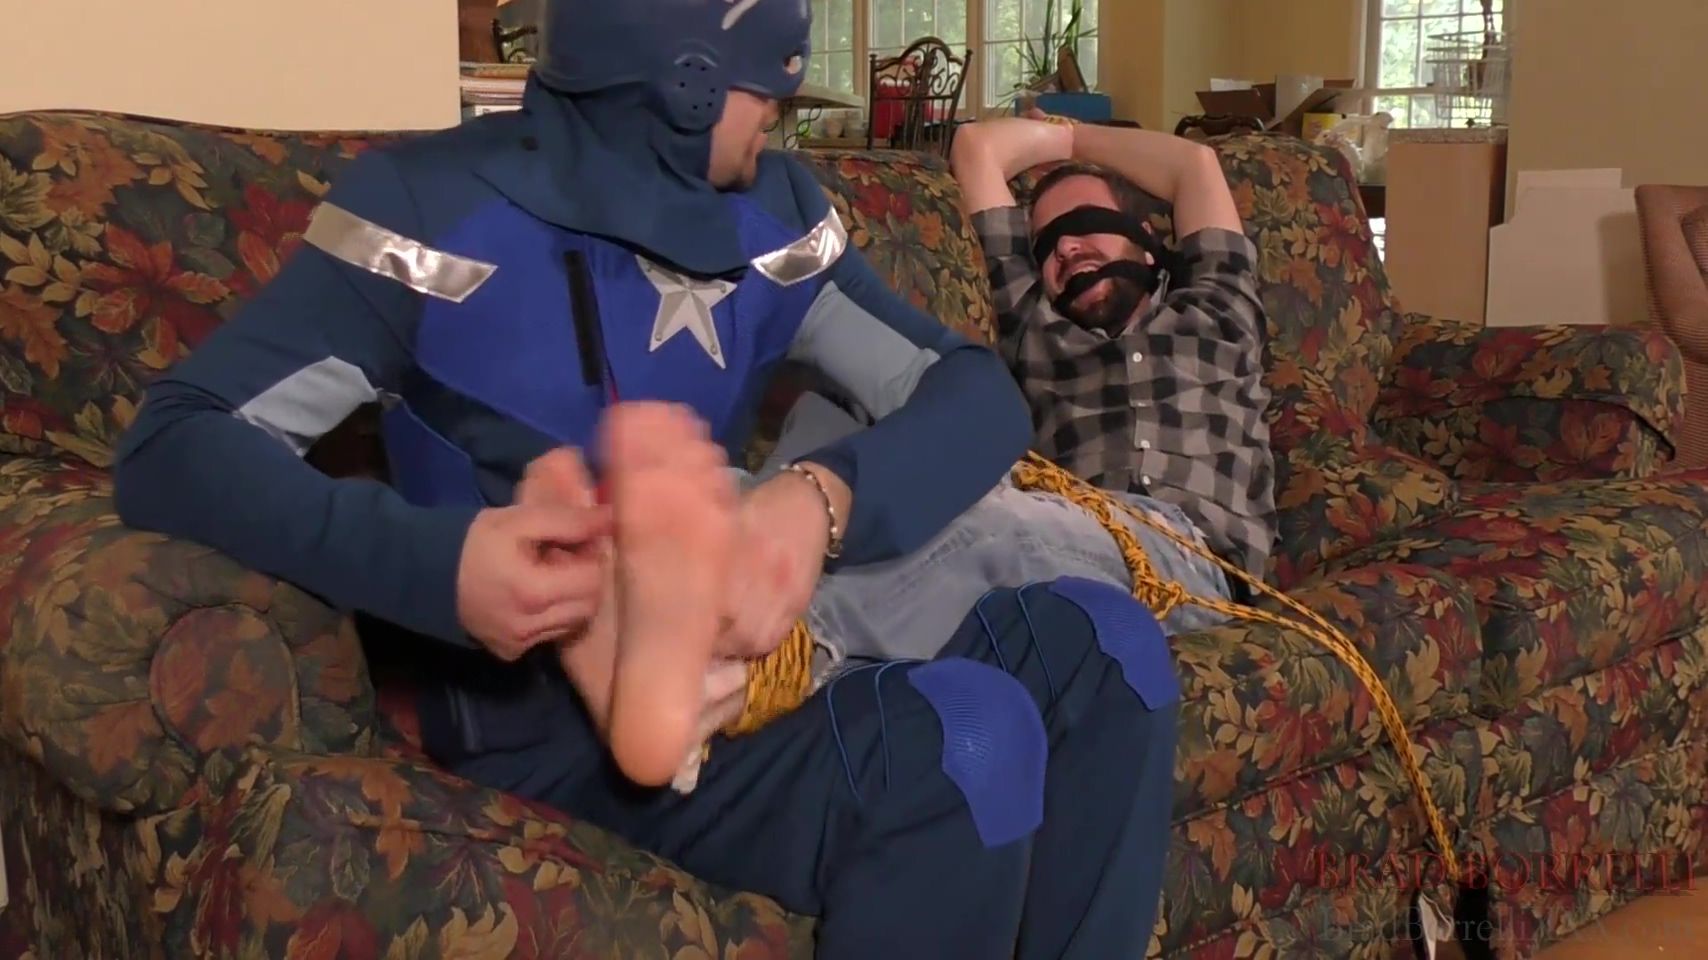 Teentube Brad Borrelli In Captain America Captures Part 1 14 Min TheSuperficial - 1